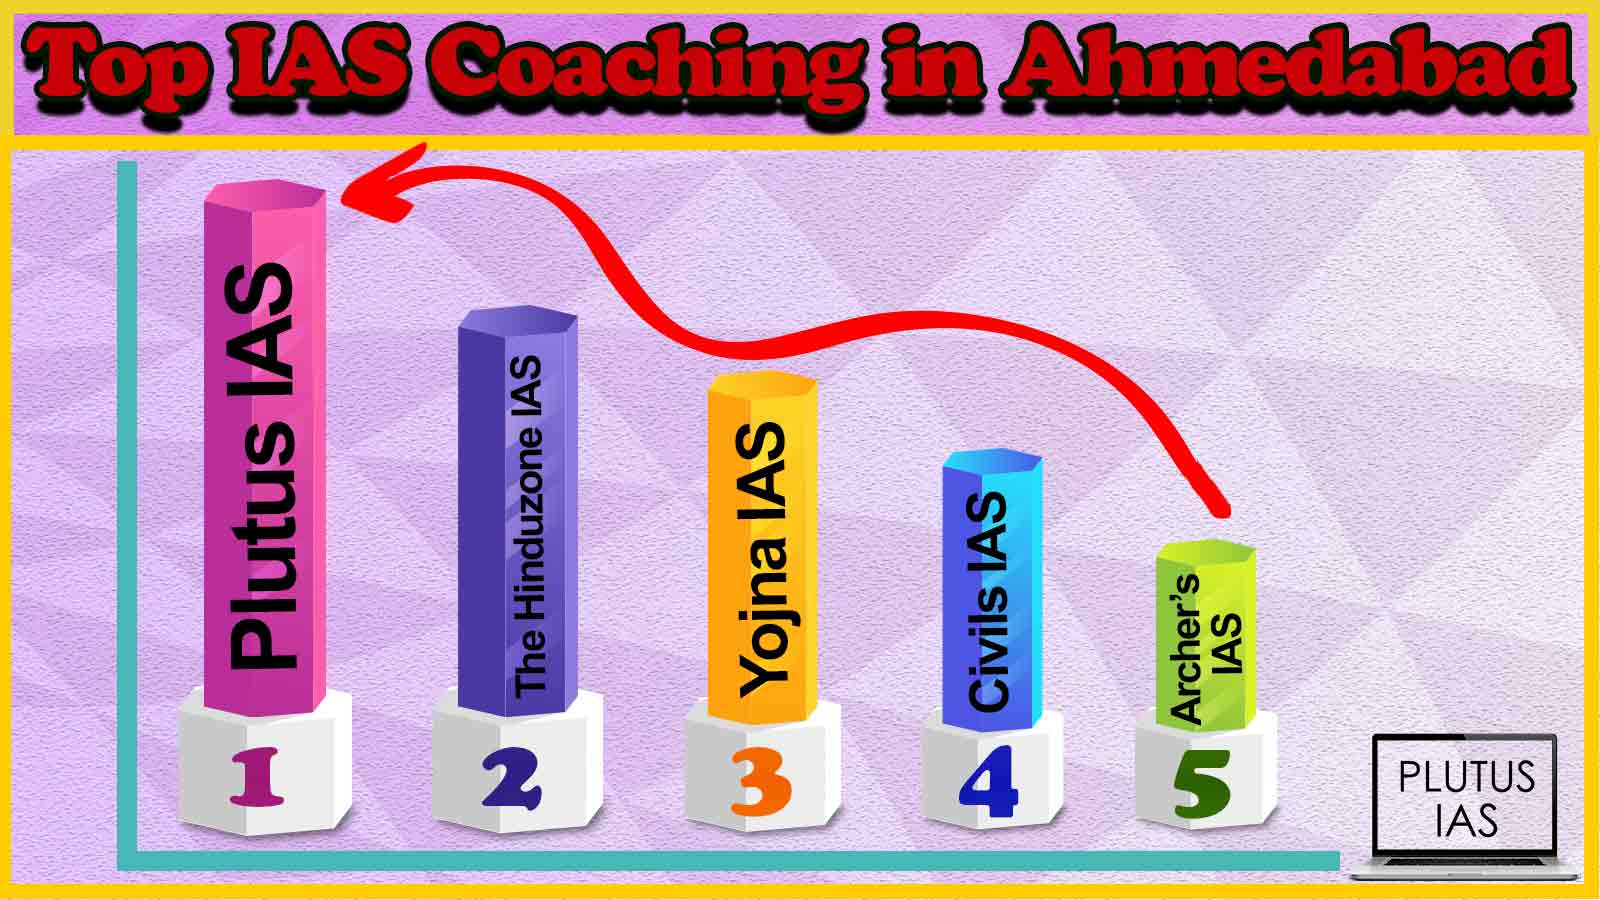 Best IAS Coaching in Ahmedabad